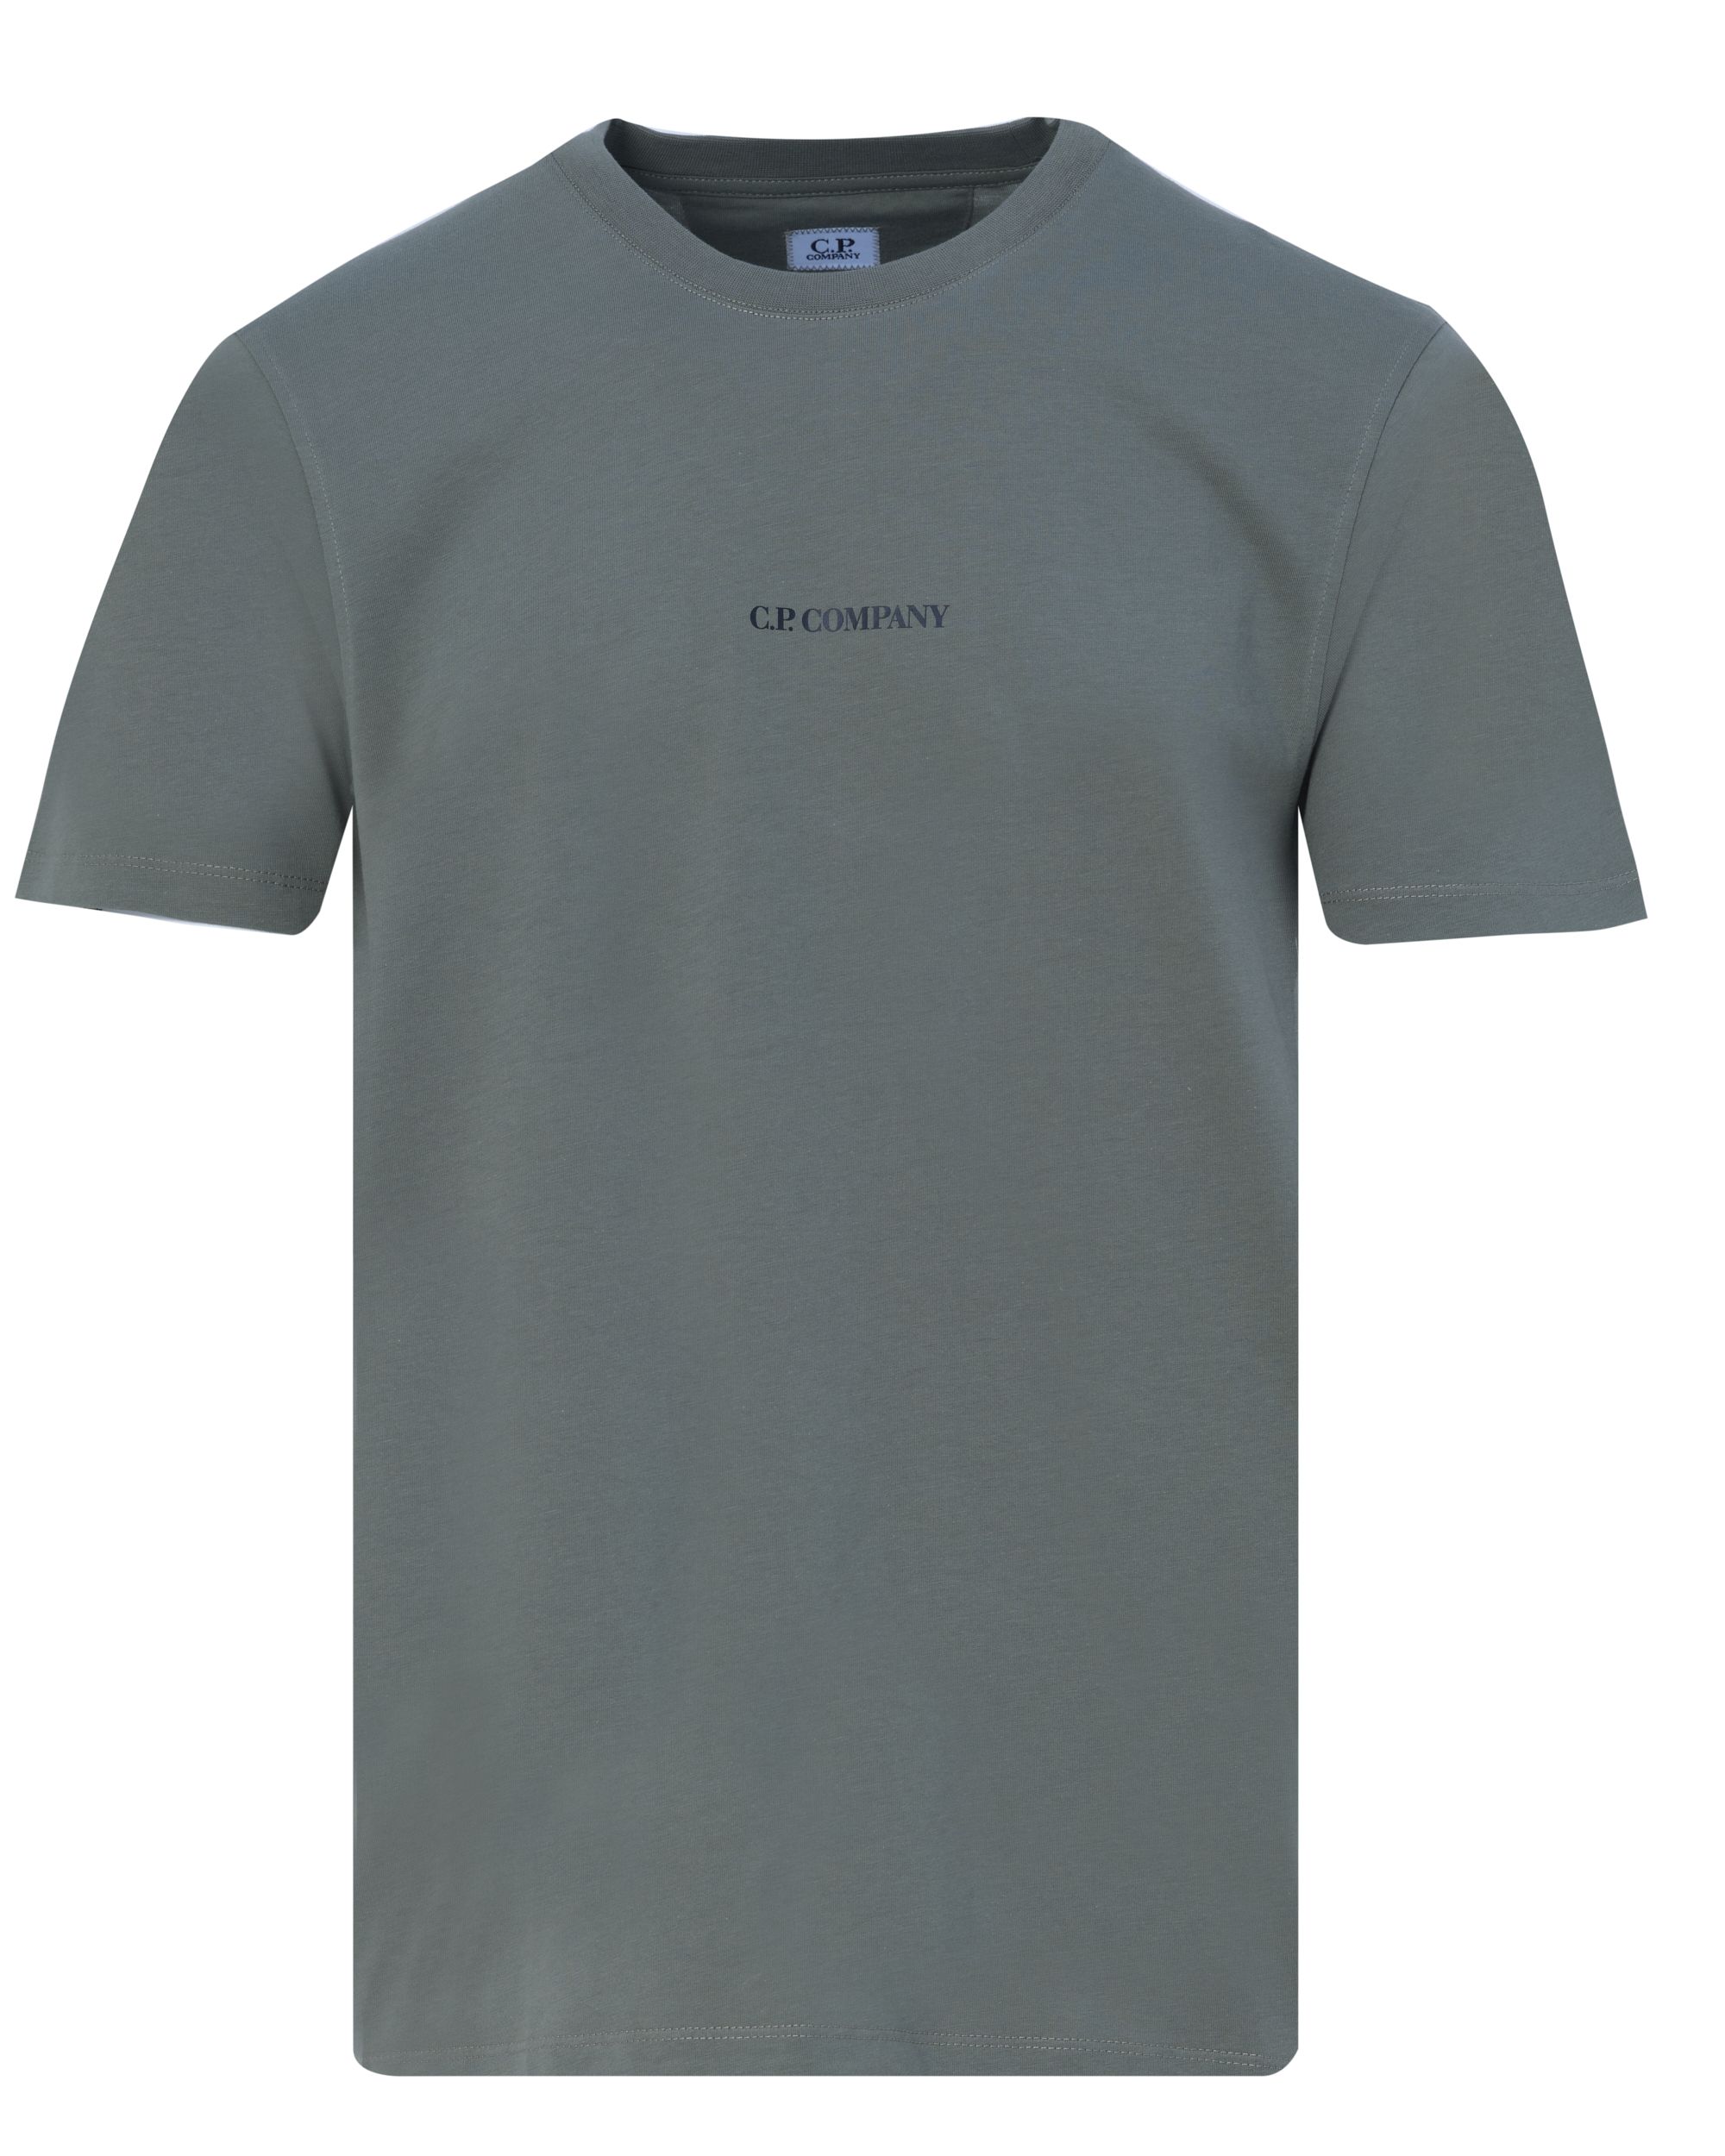 C.P Company T-shirt KM Groen 082108-001-L